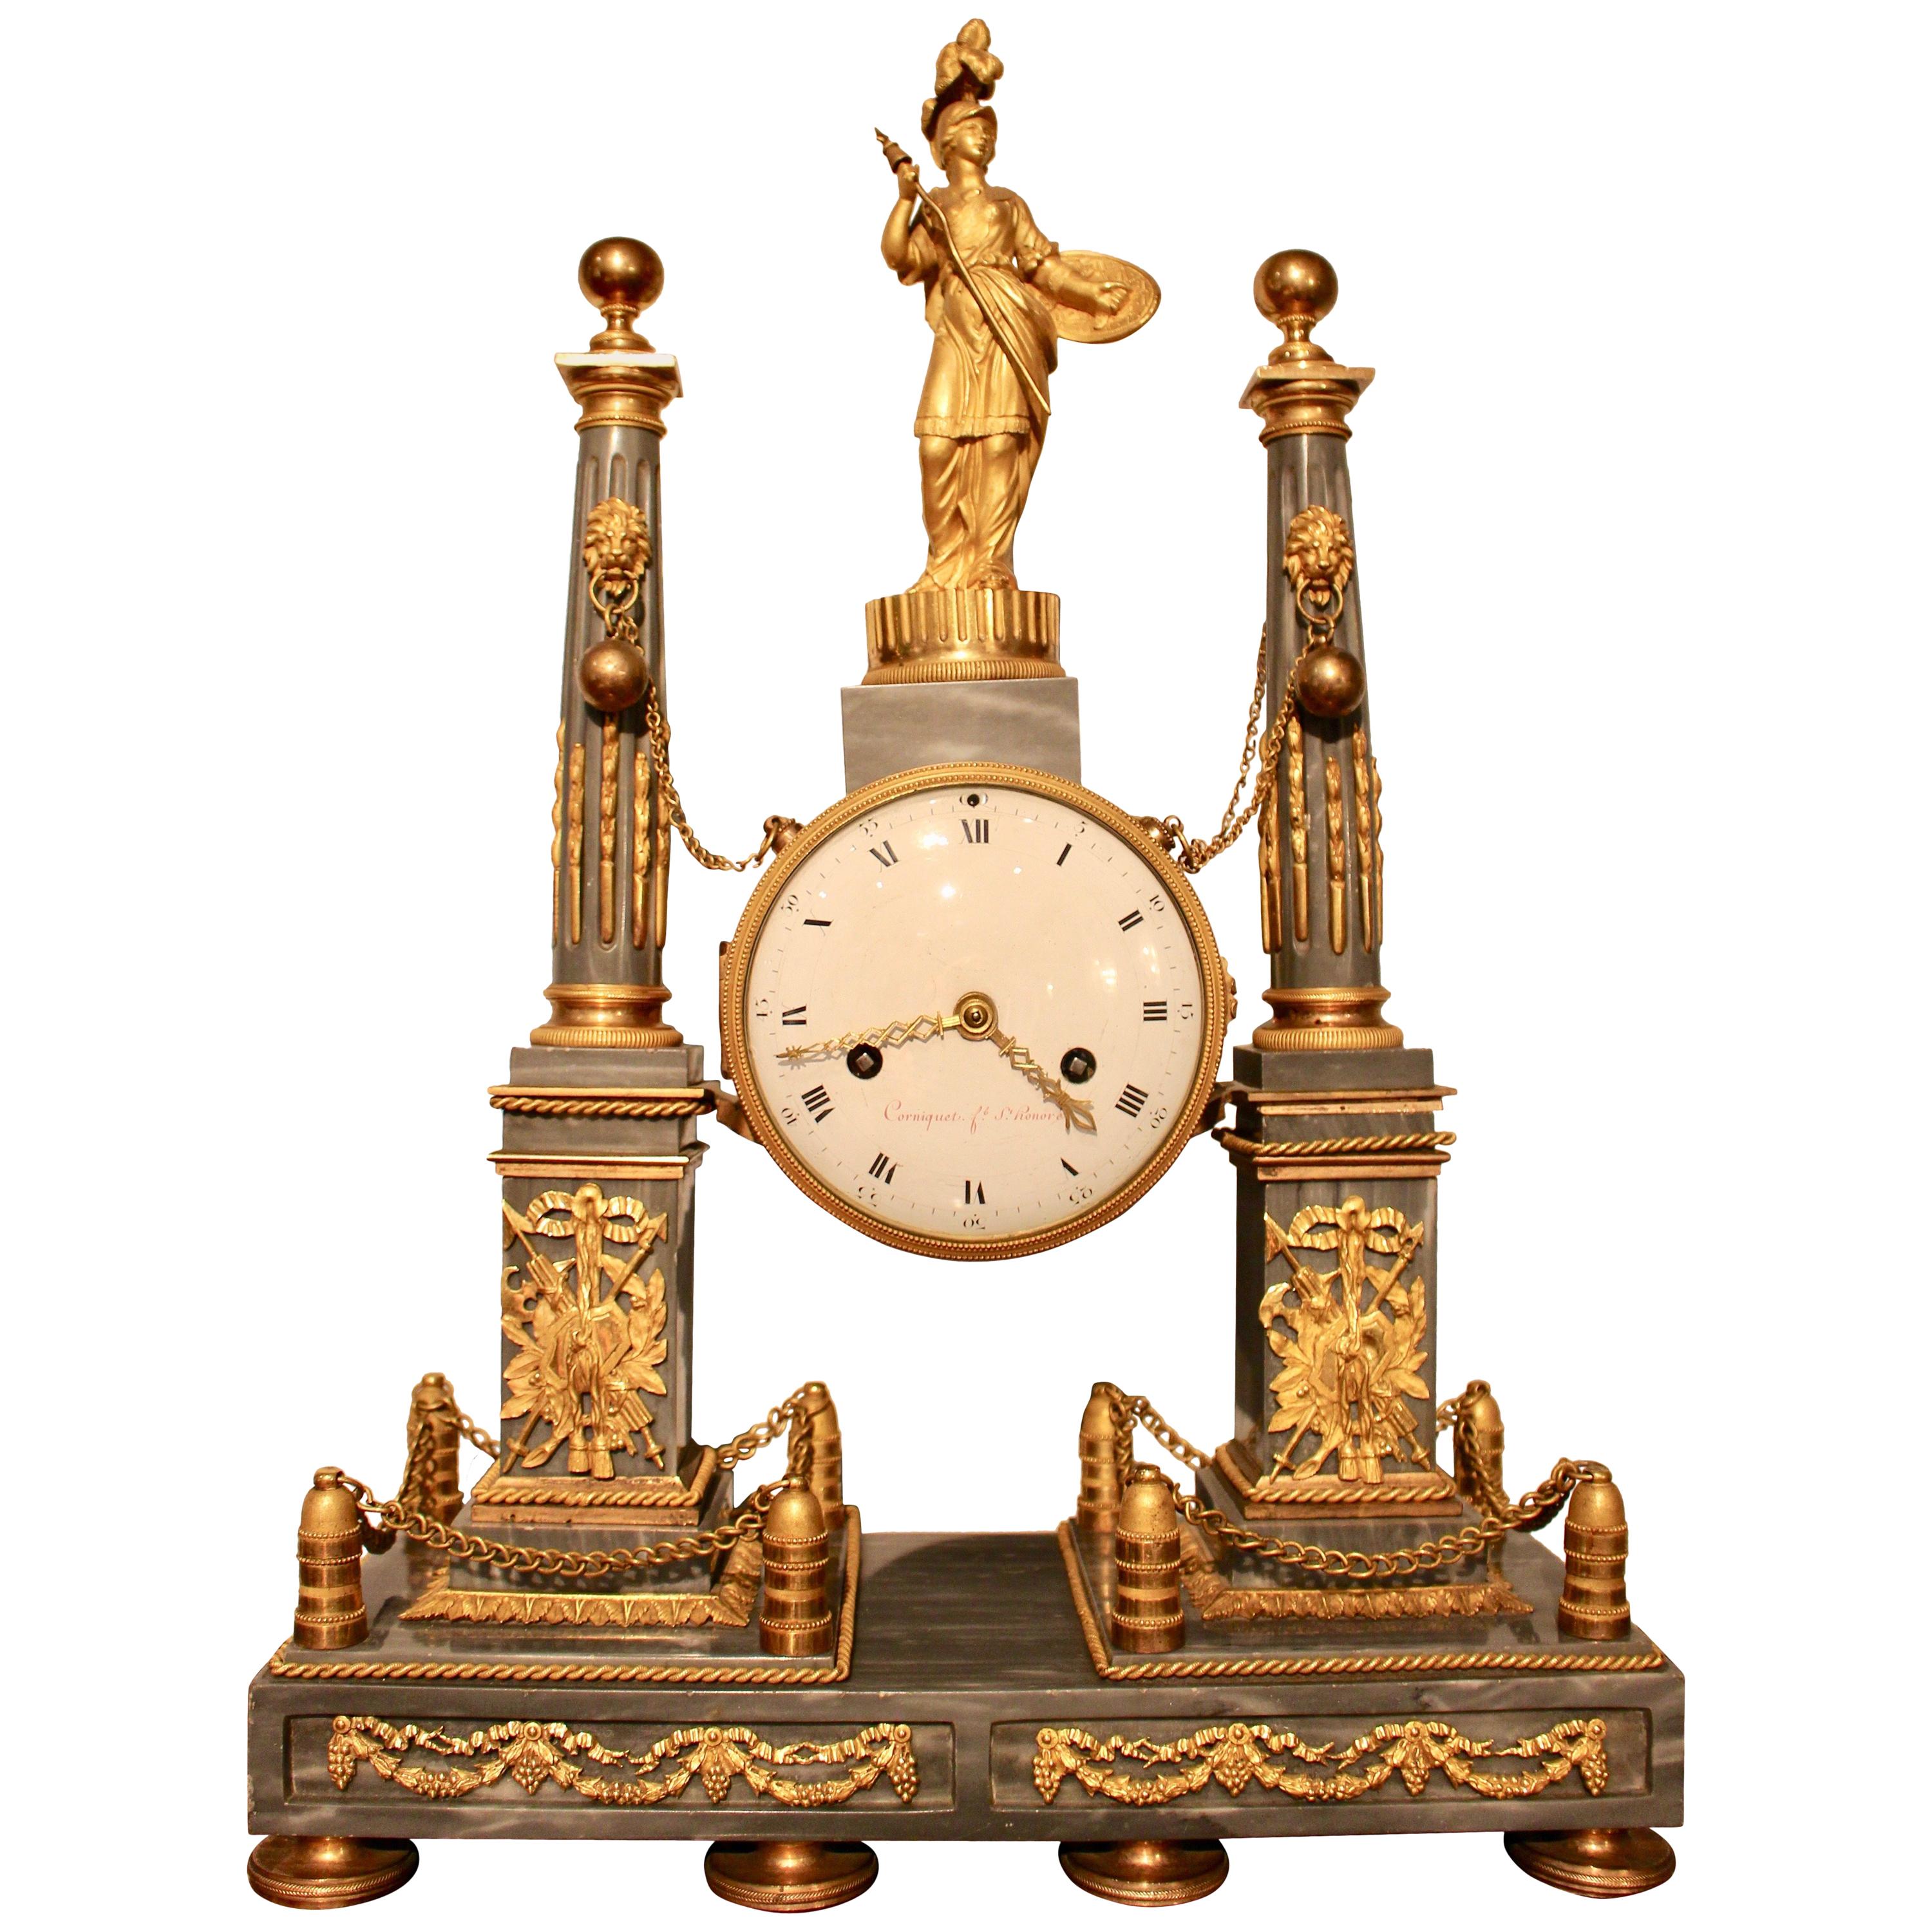 Horloge Portico Louis XVI en marbre bleu turquin avec ornement en bronze doré